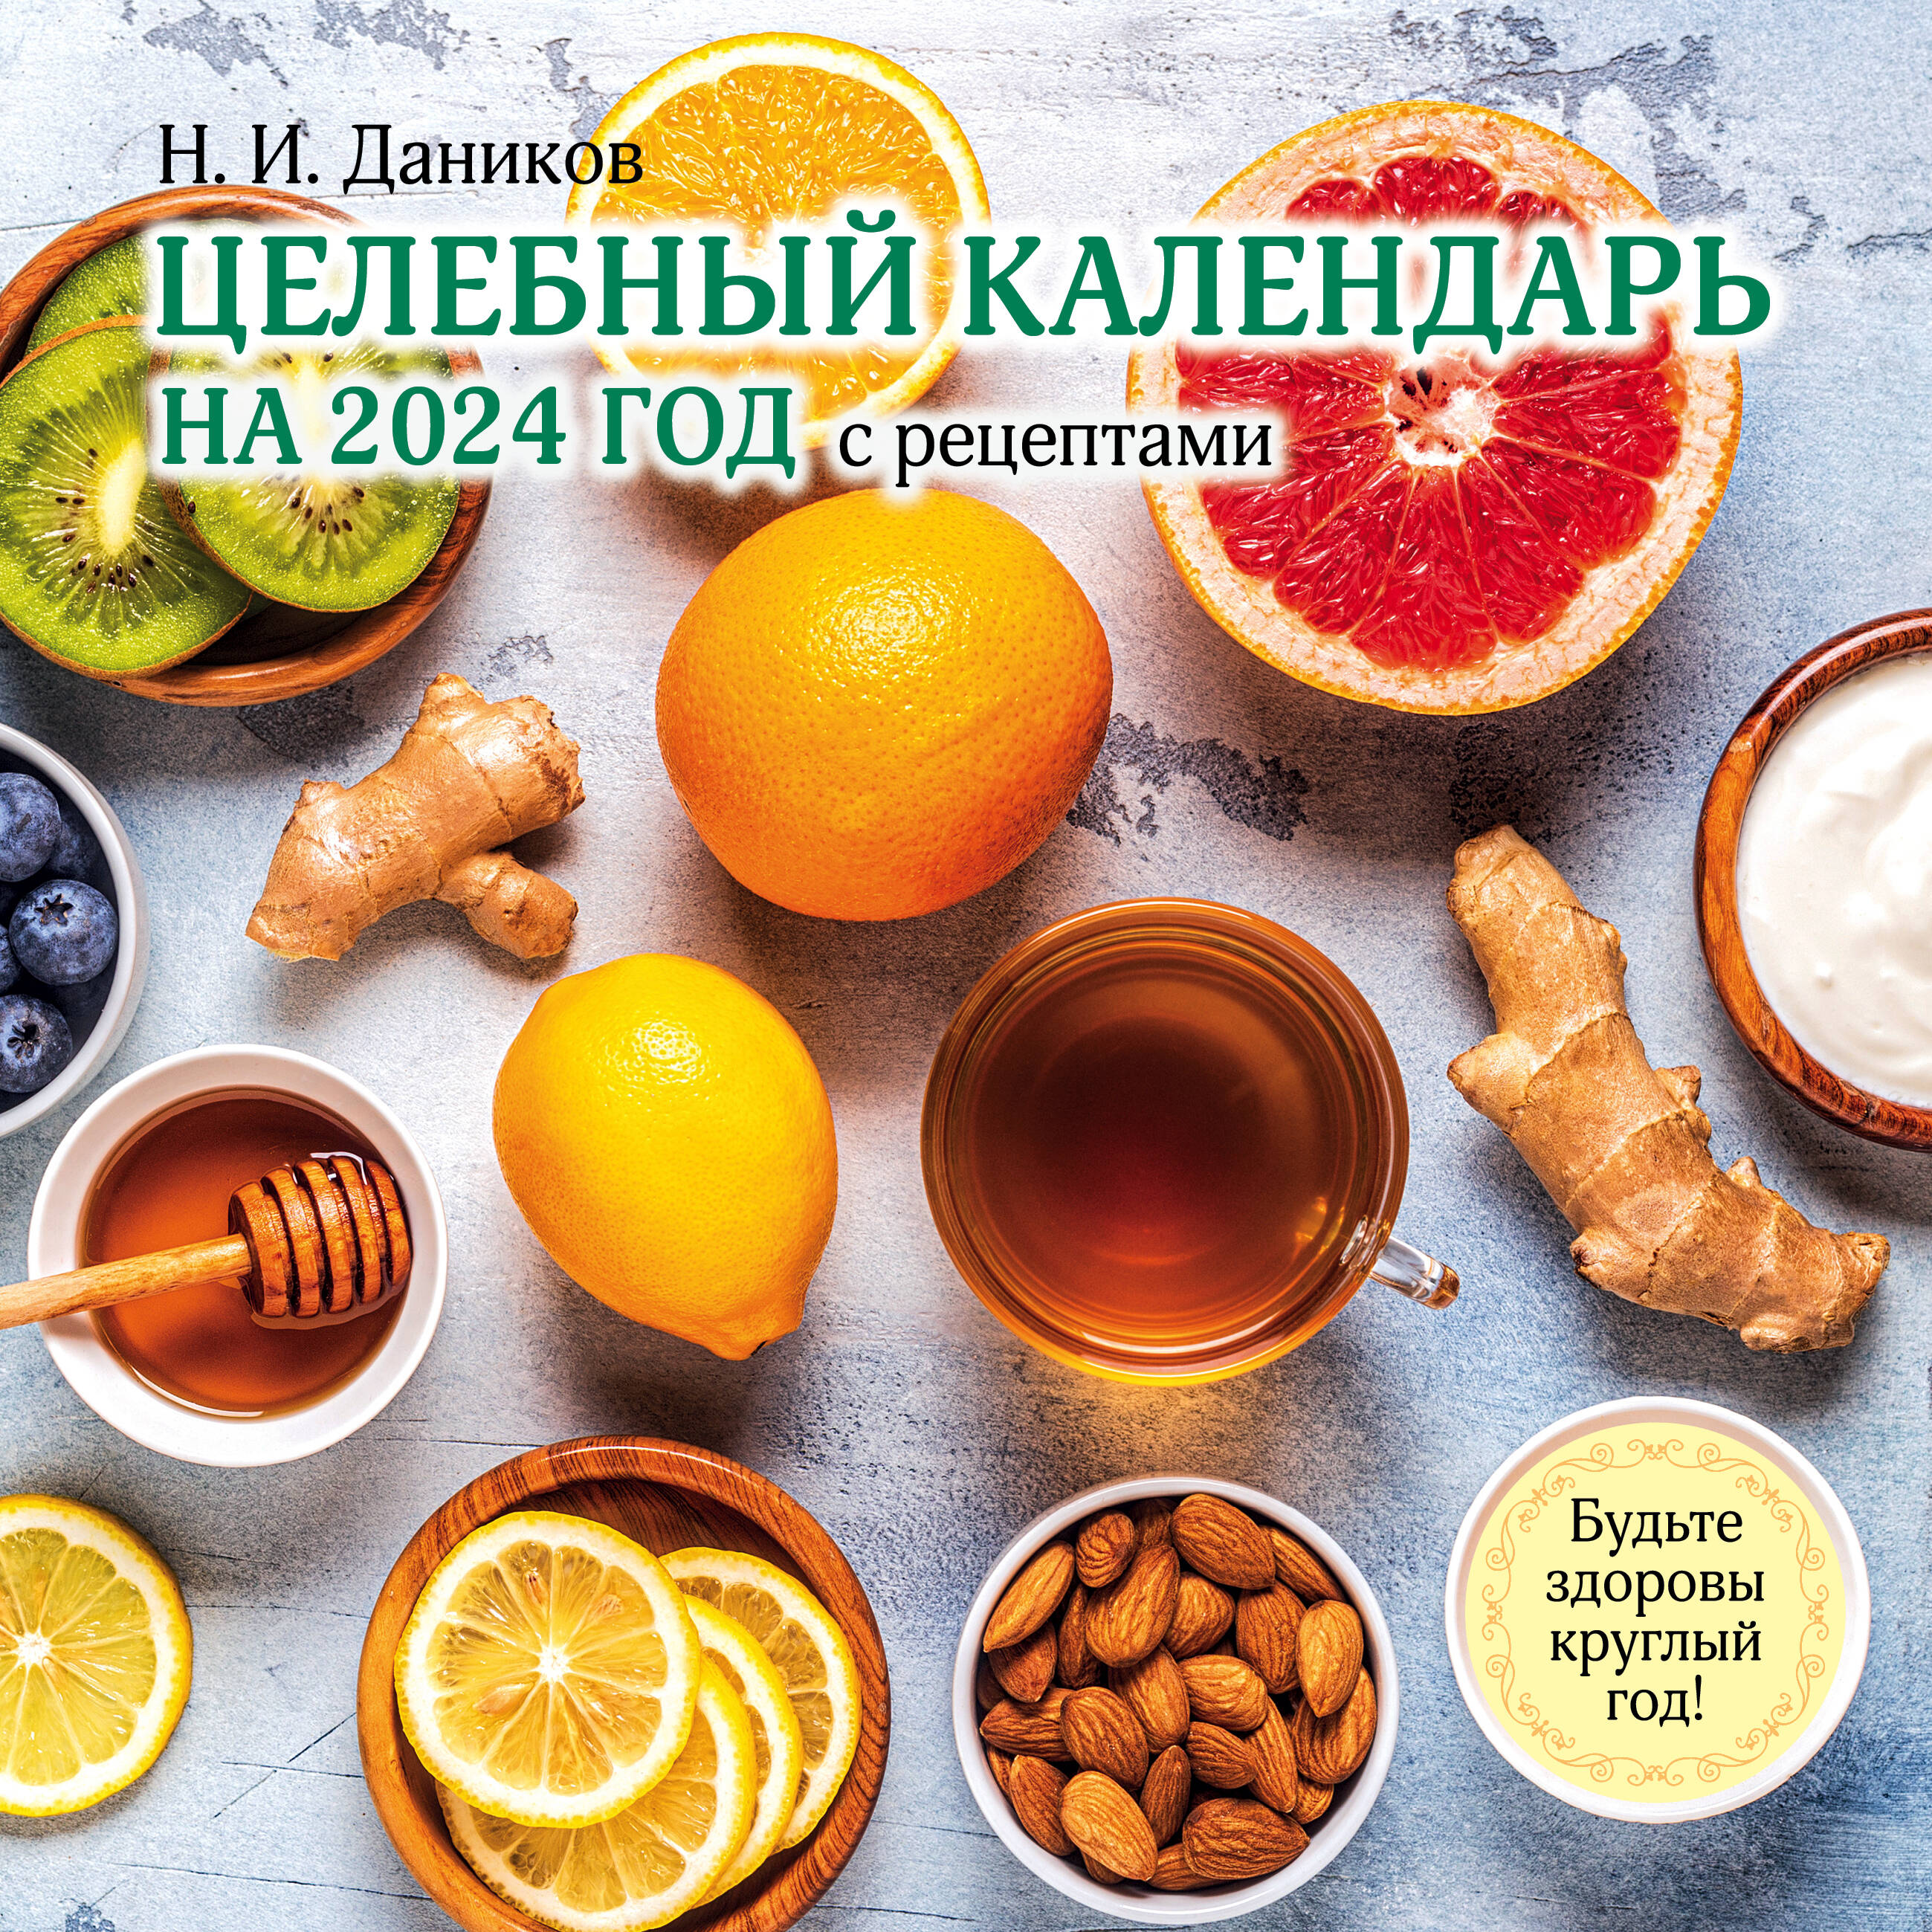 Целебный календарь на 2024 год с рецептами от фито-терапевта Н.И. Даникова. Эксмо